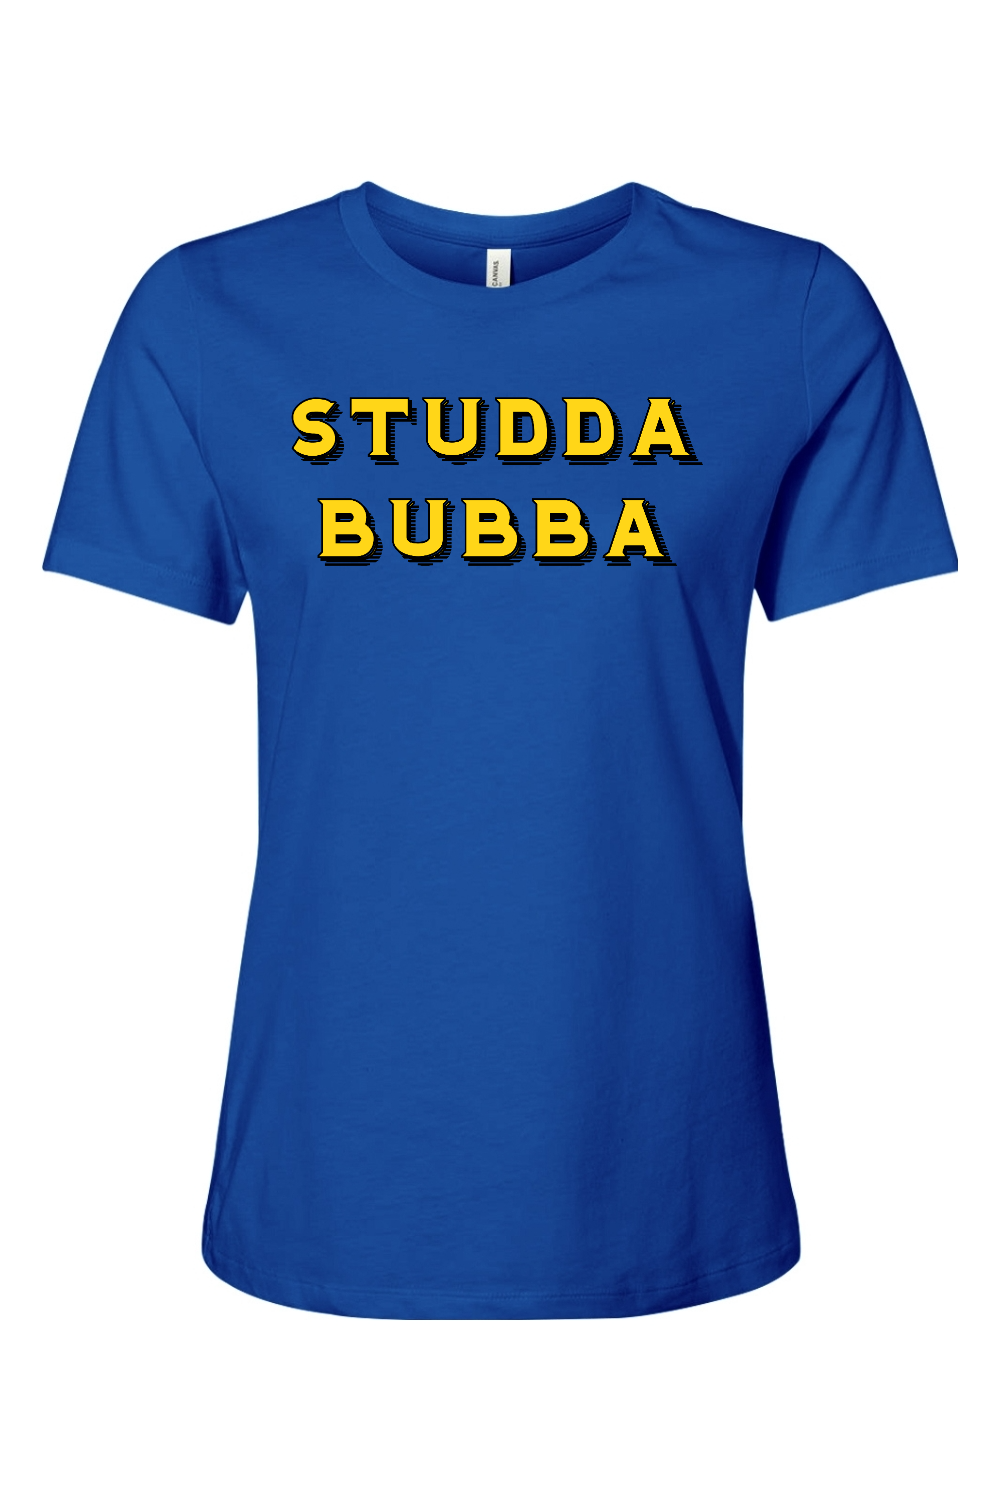 Studda Bubba - Ladies Tee - Yinzylvania